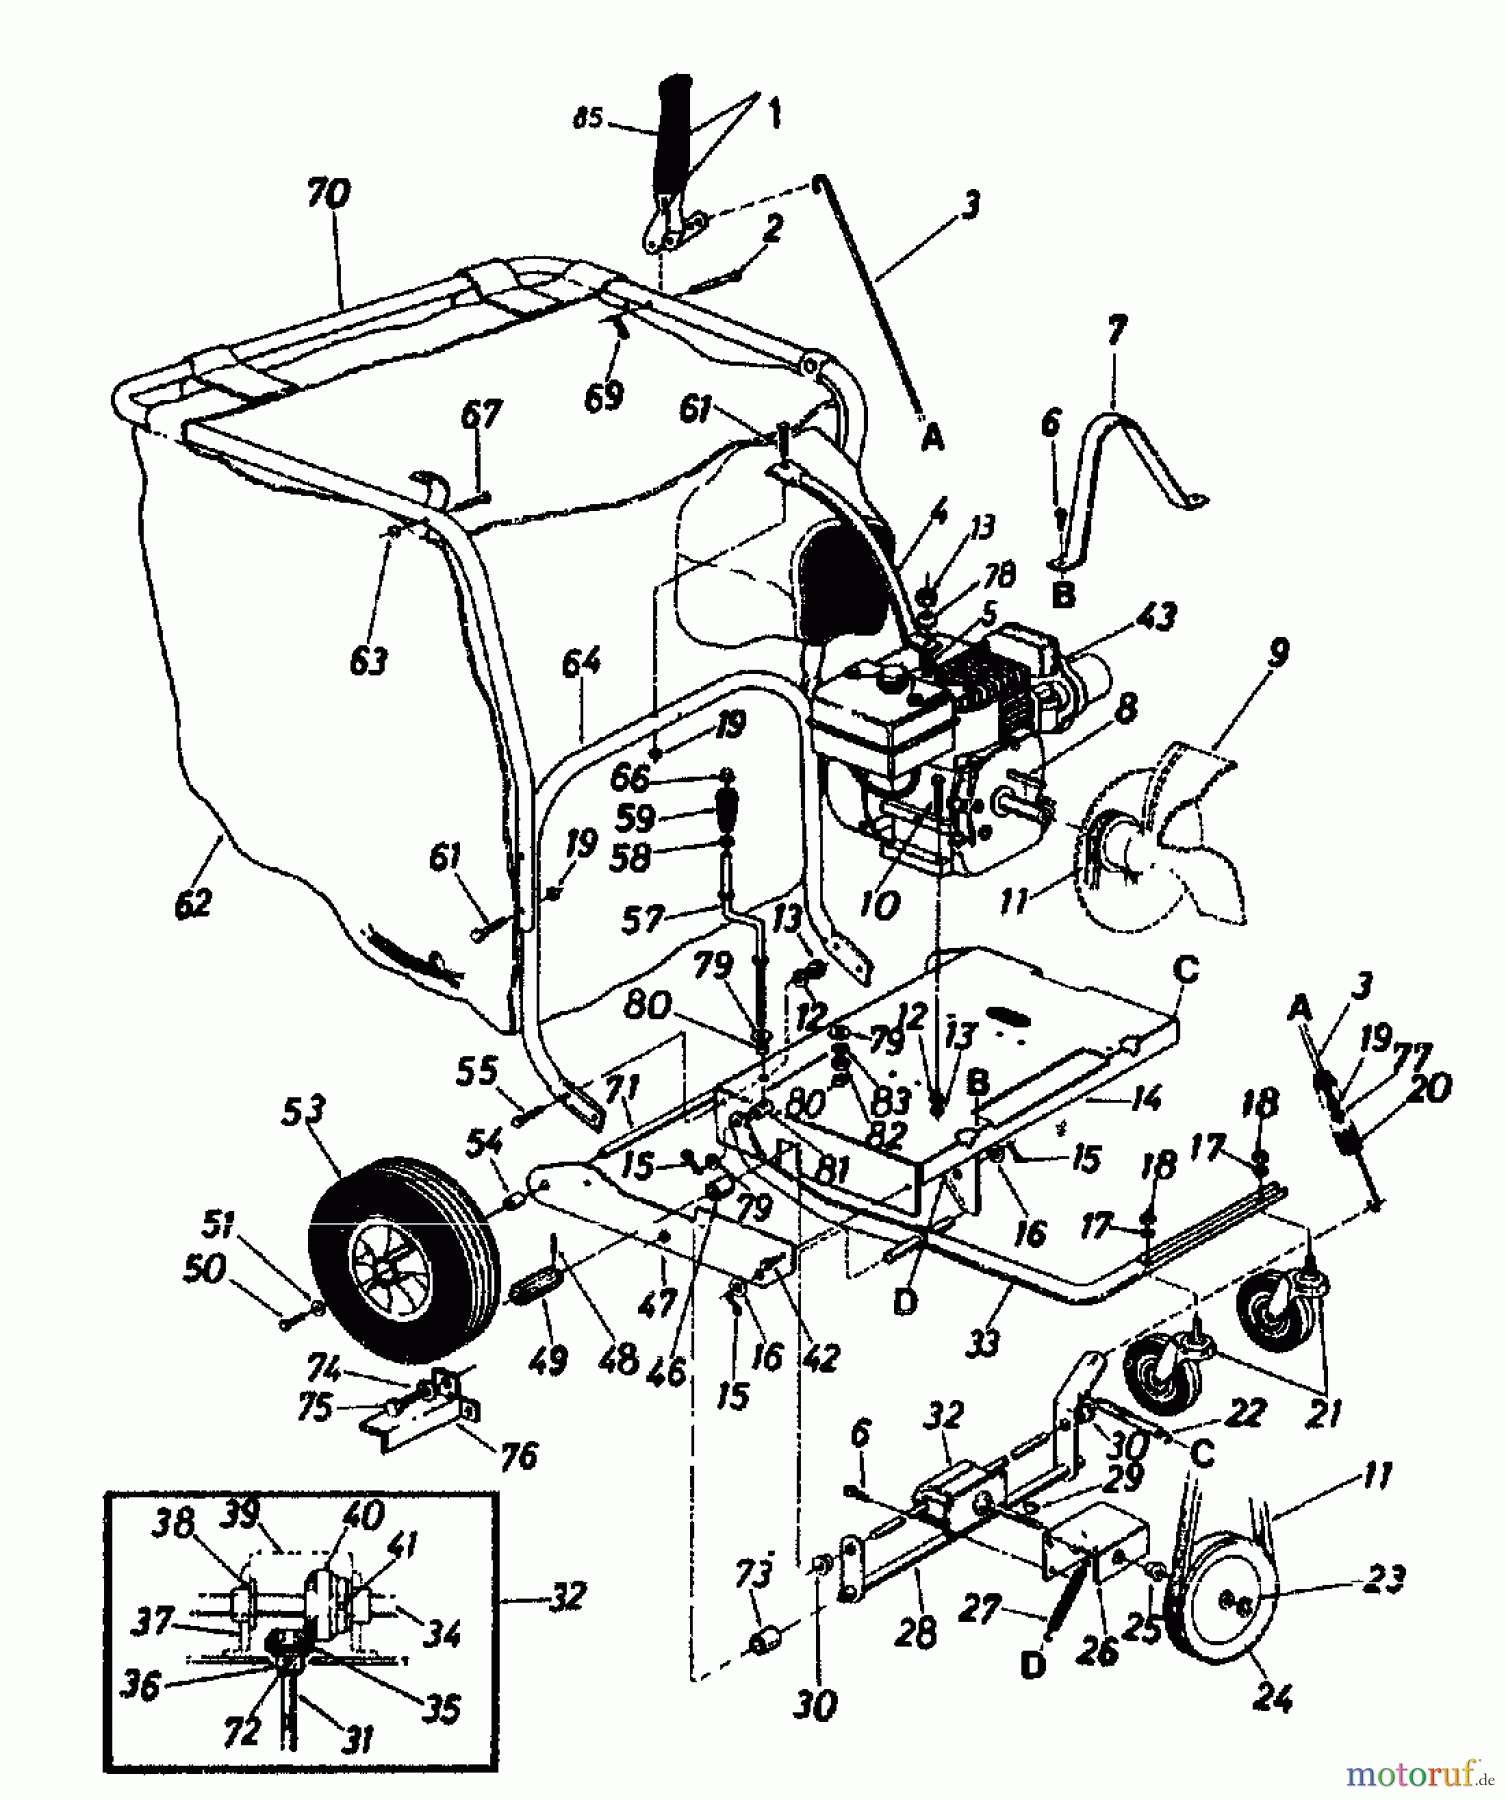  Gutbrod Leaf blower, Blower vac LS 76-50 04201.01  (1996) Basic machine